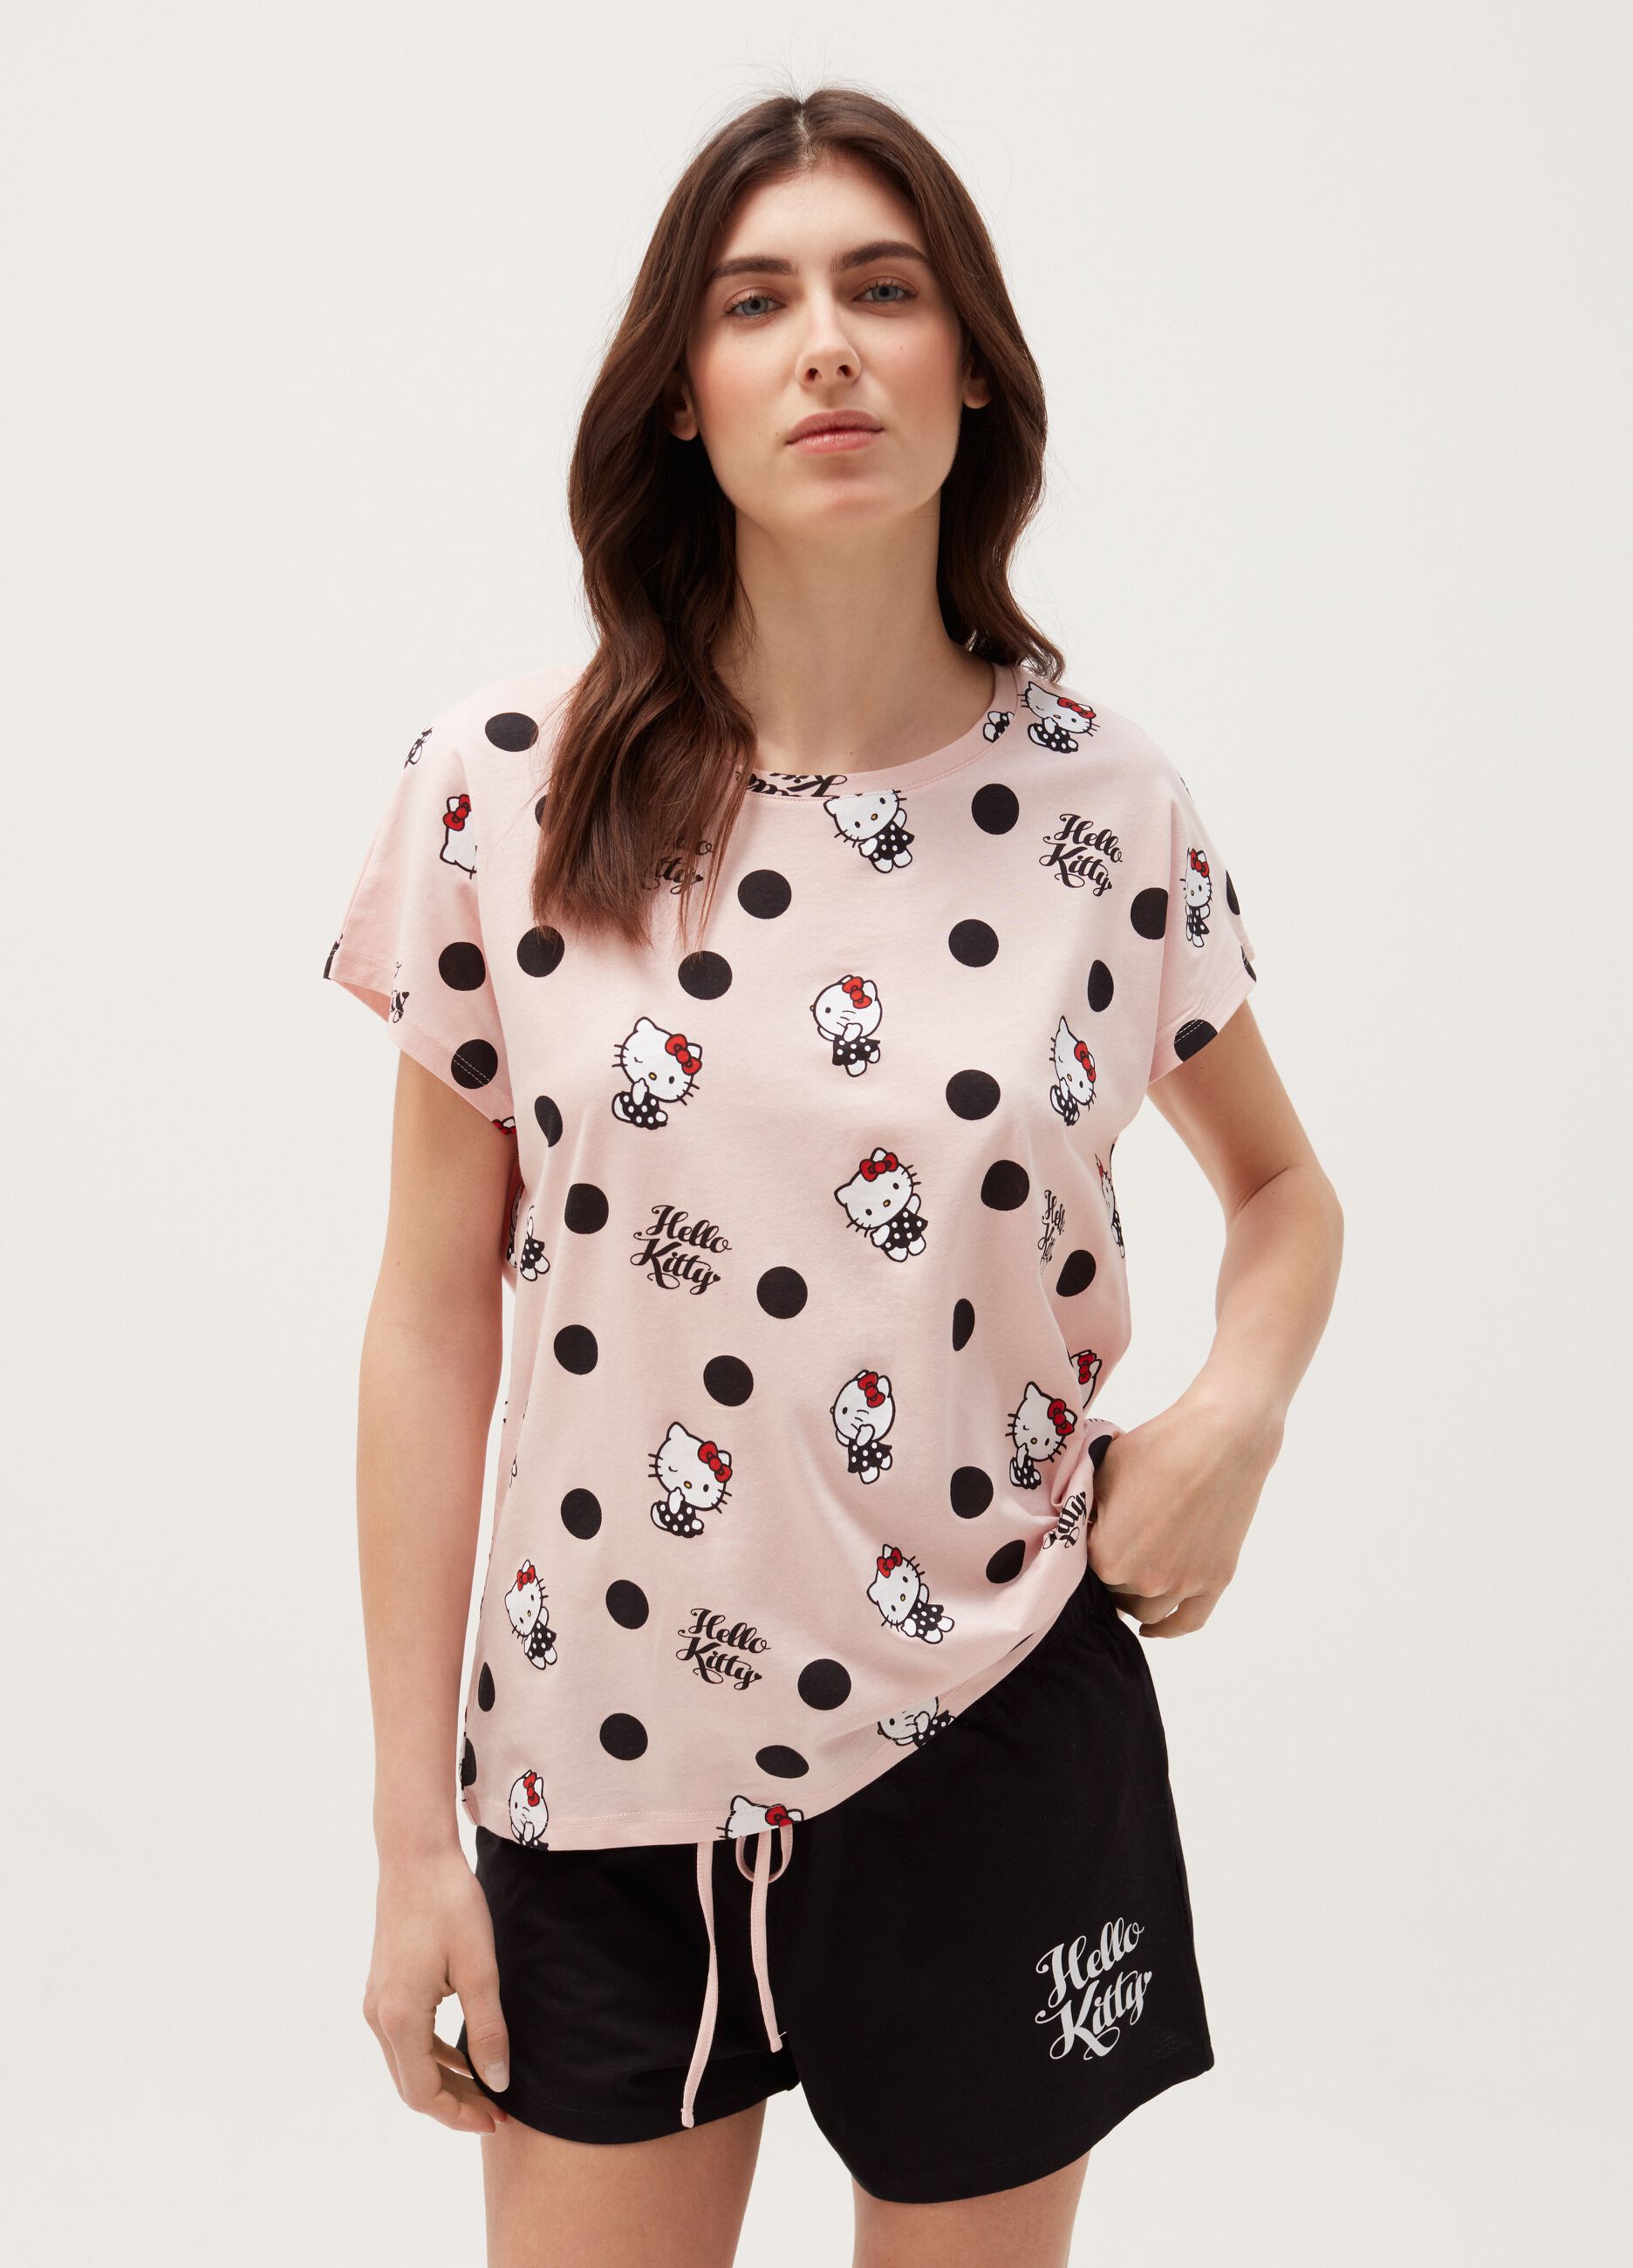 Polka dot cotton pyjamas with Hello Kitty